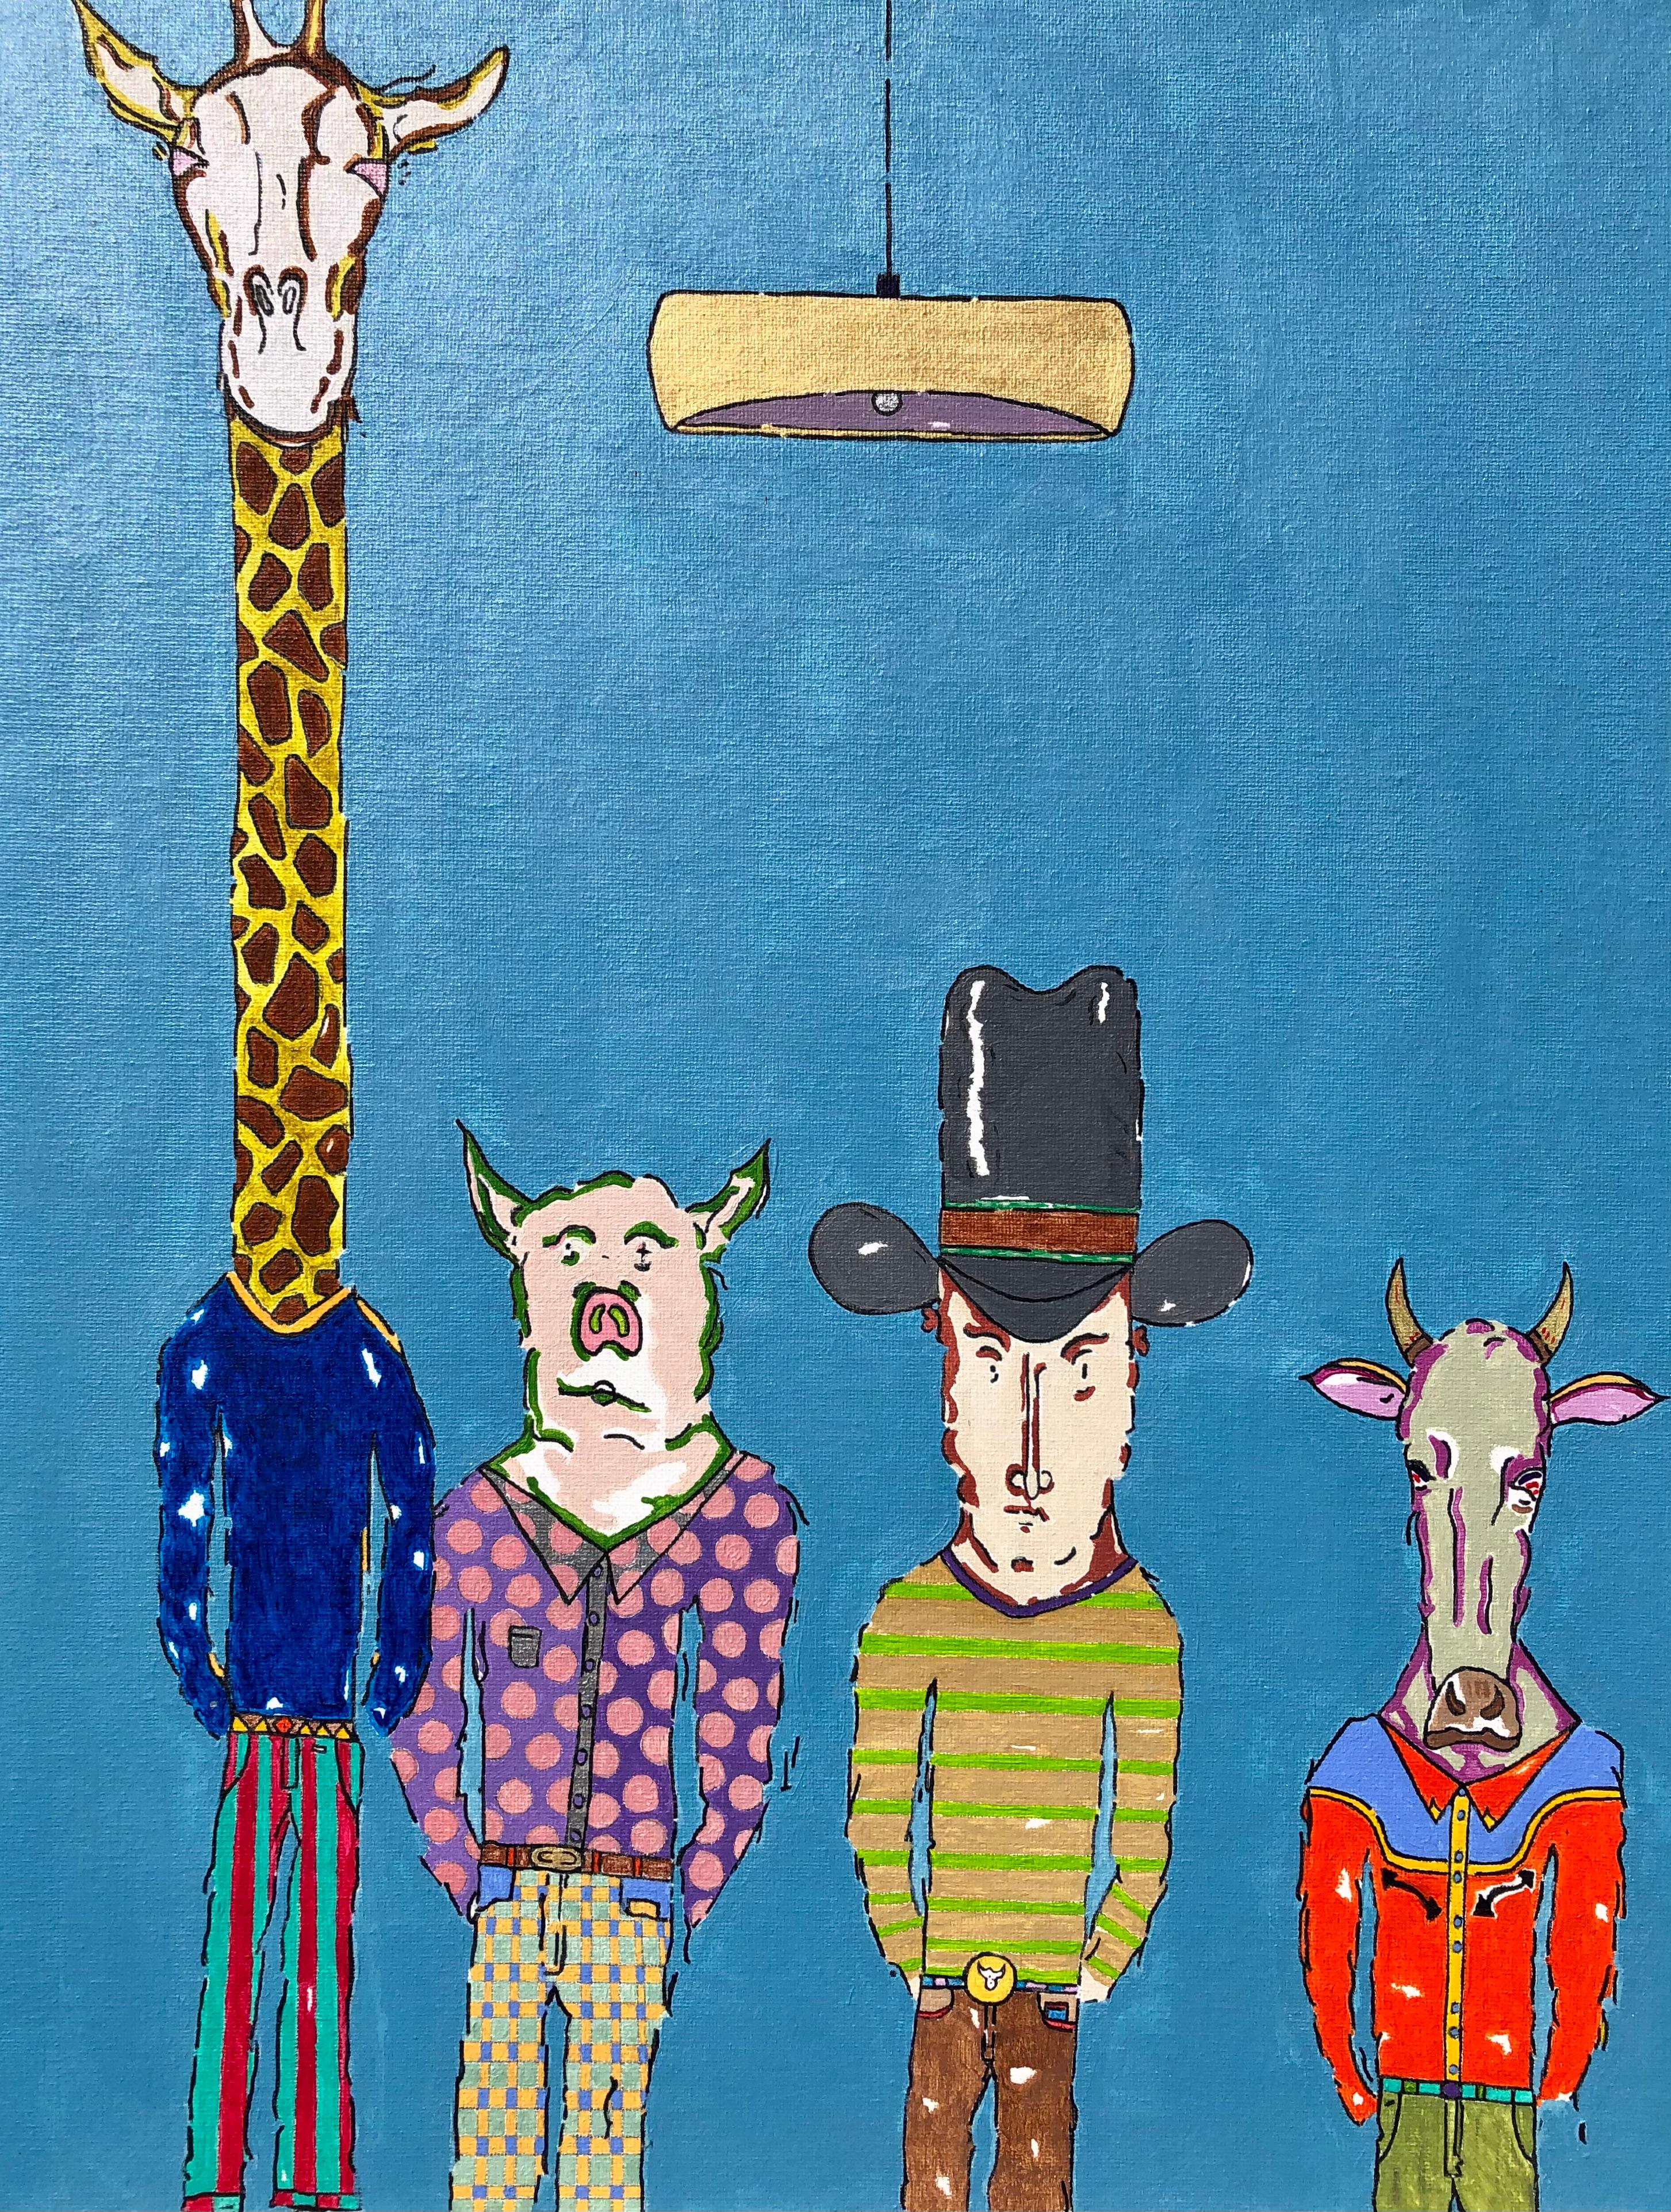 Giraffe & Ten Gallon Hat, Original Painting